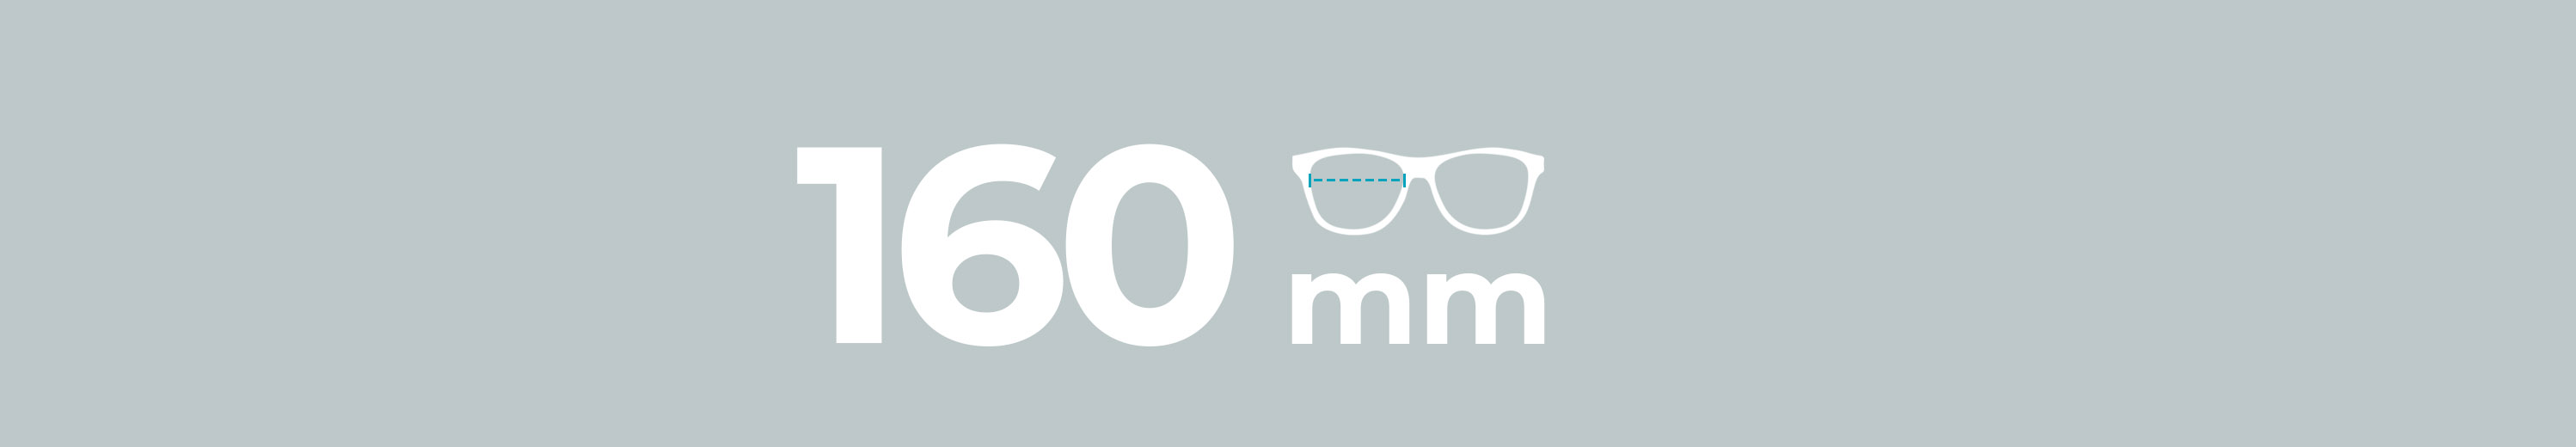 Lens Size: 160mm Glasses